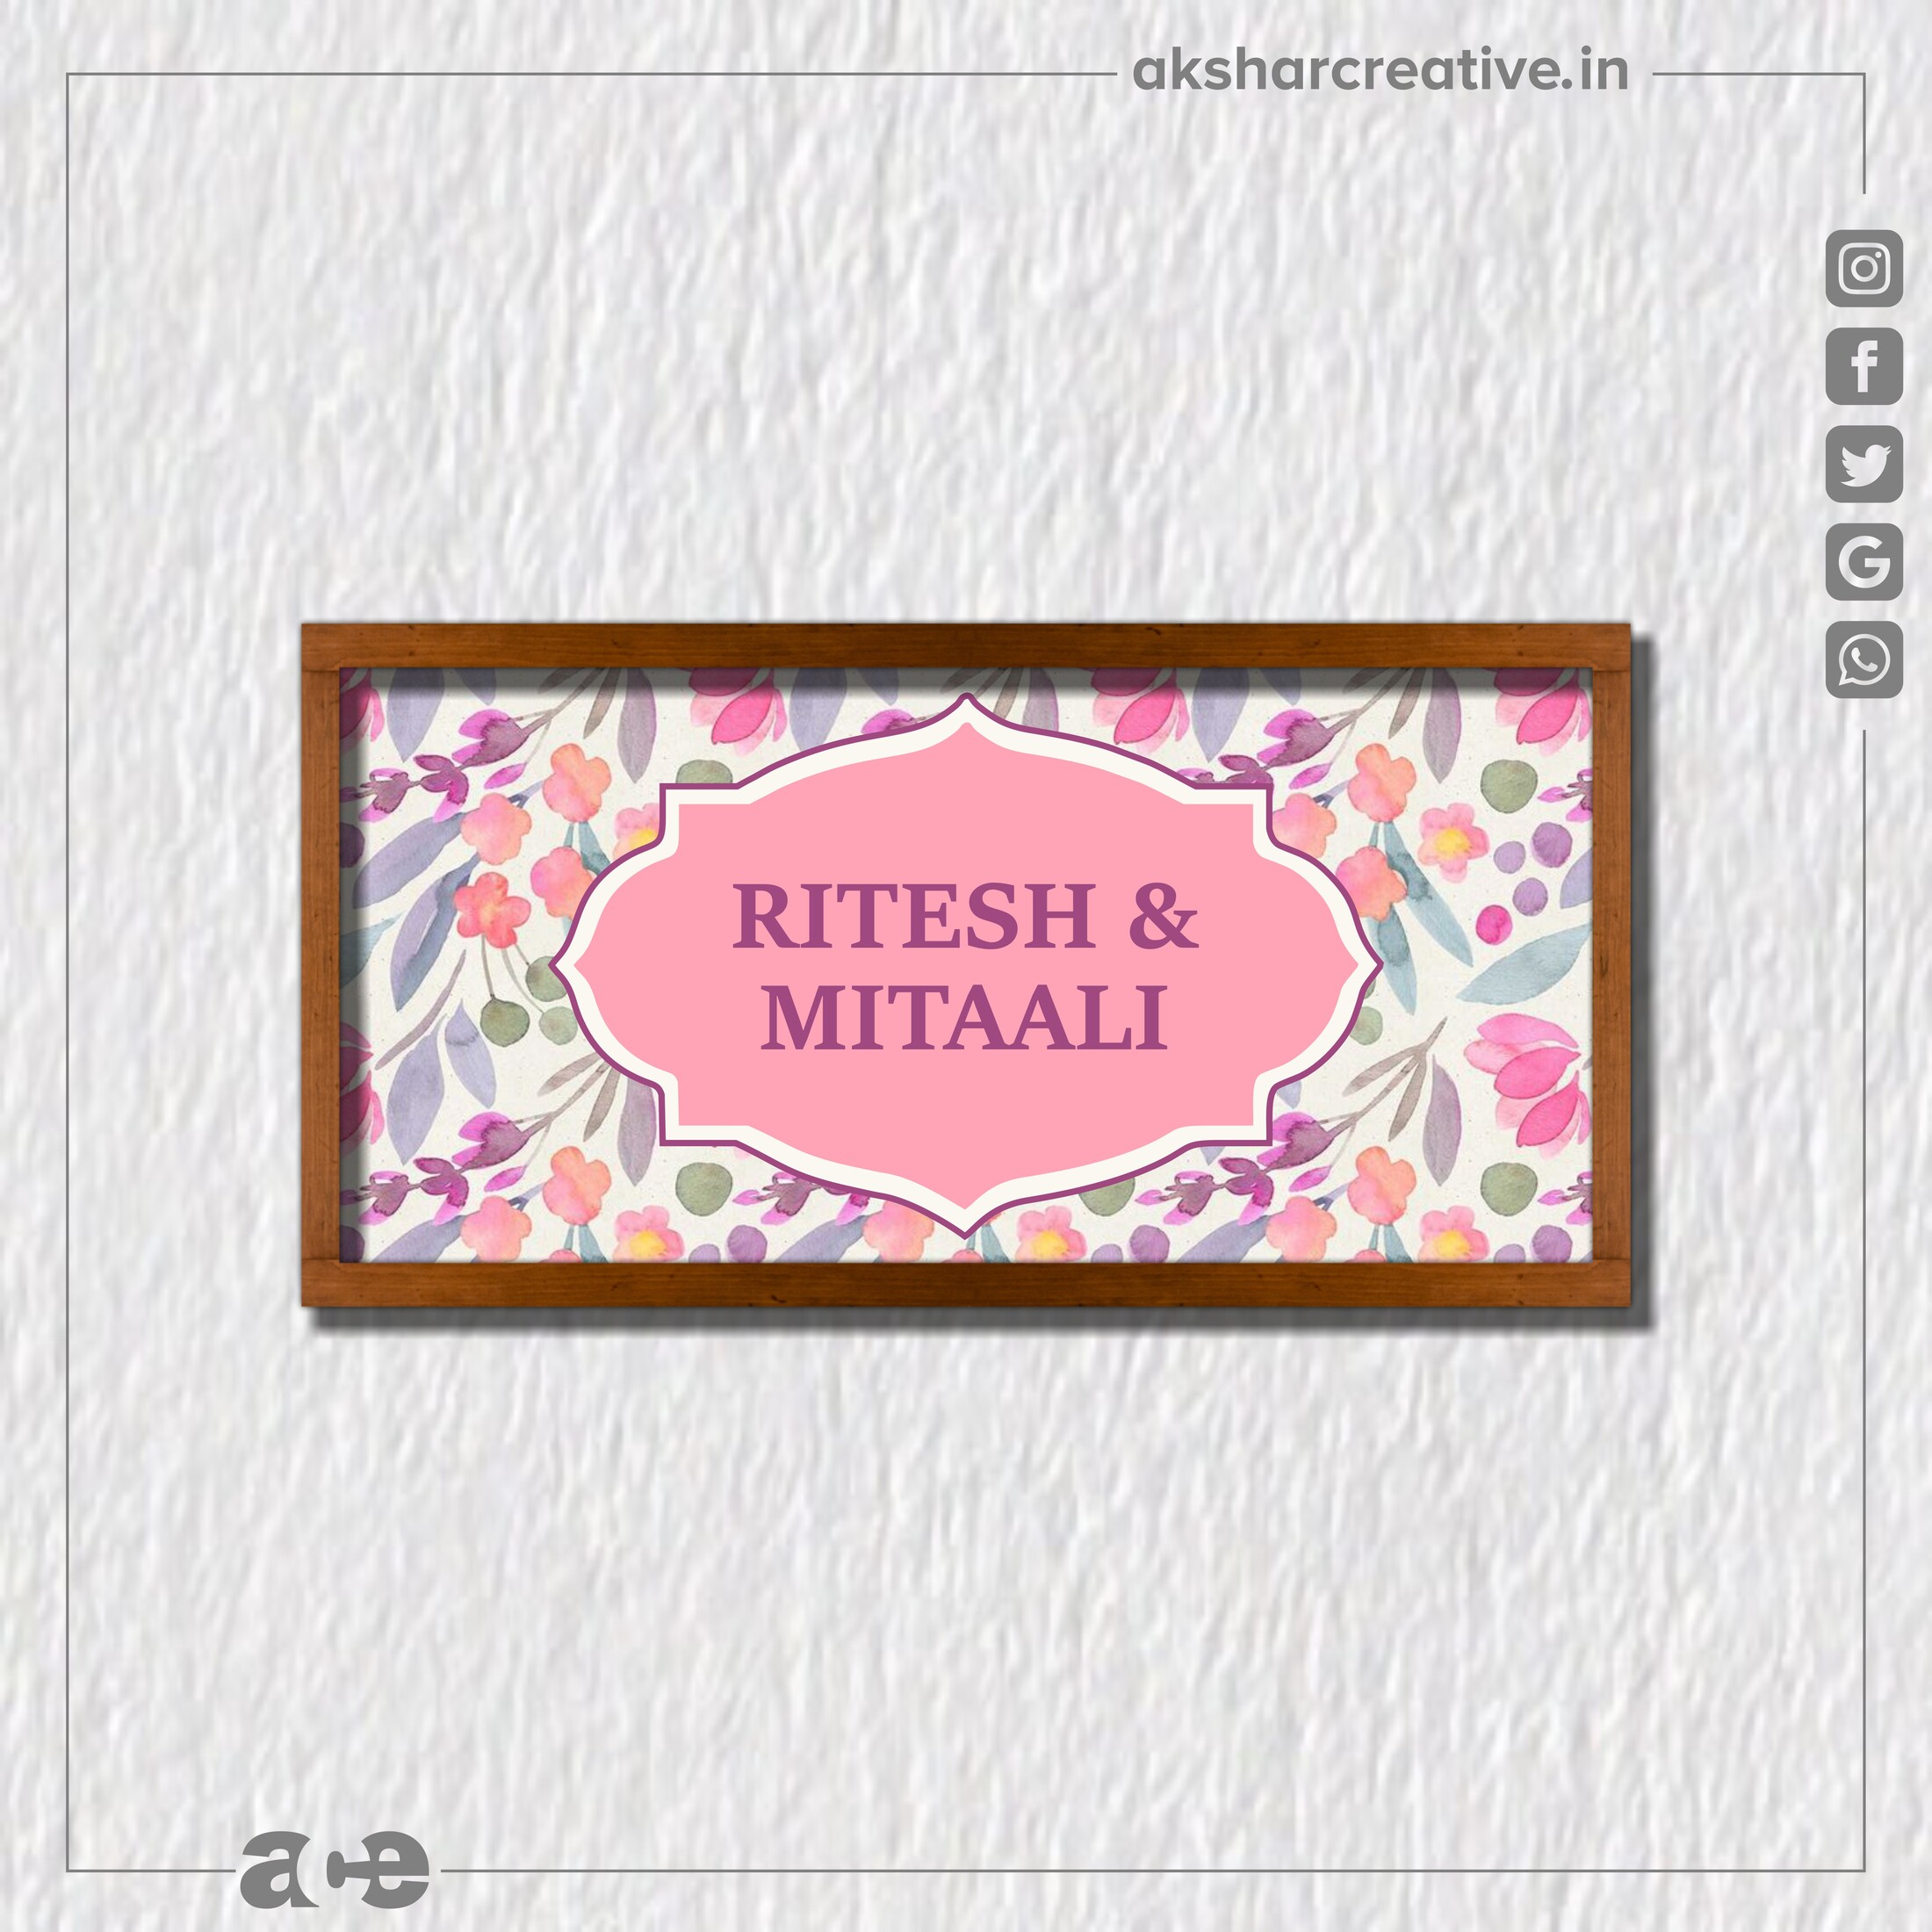 Acetpnp012 Ritesh And Mitaali The Printed Nameplate